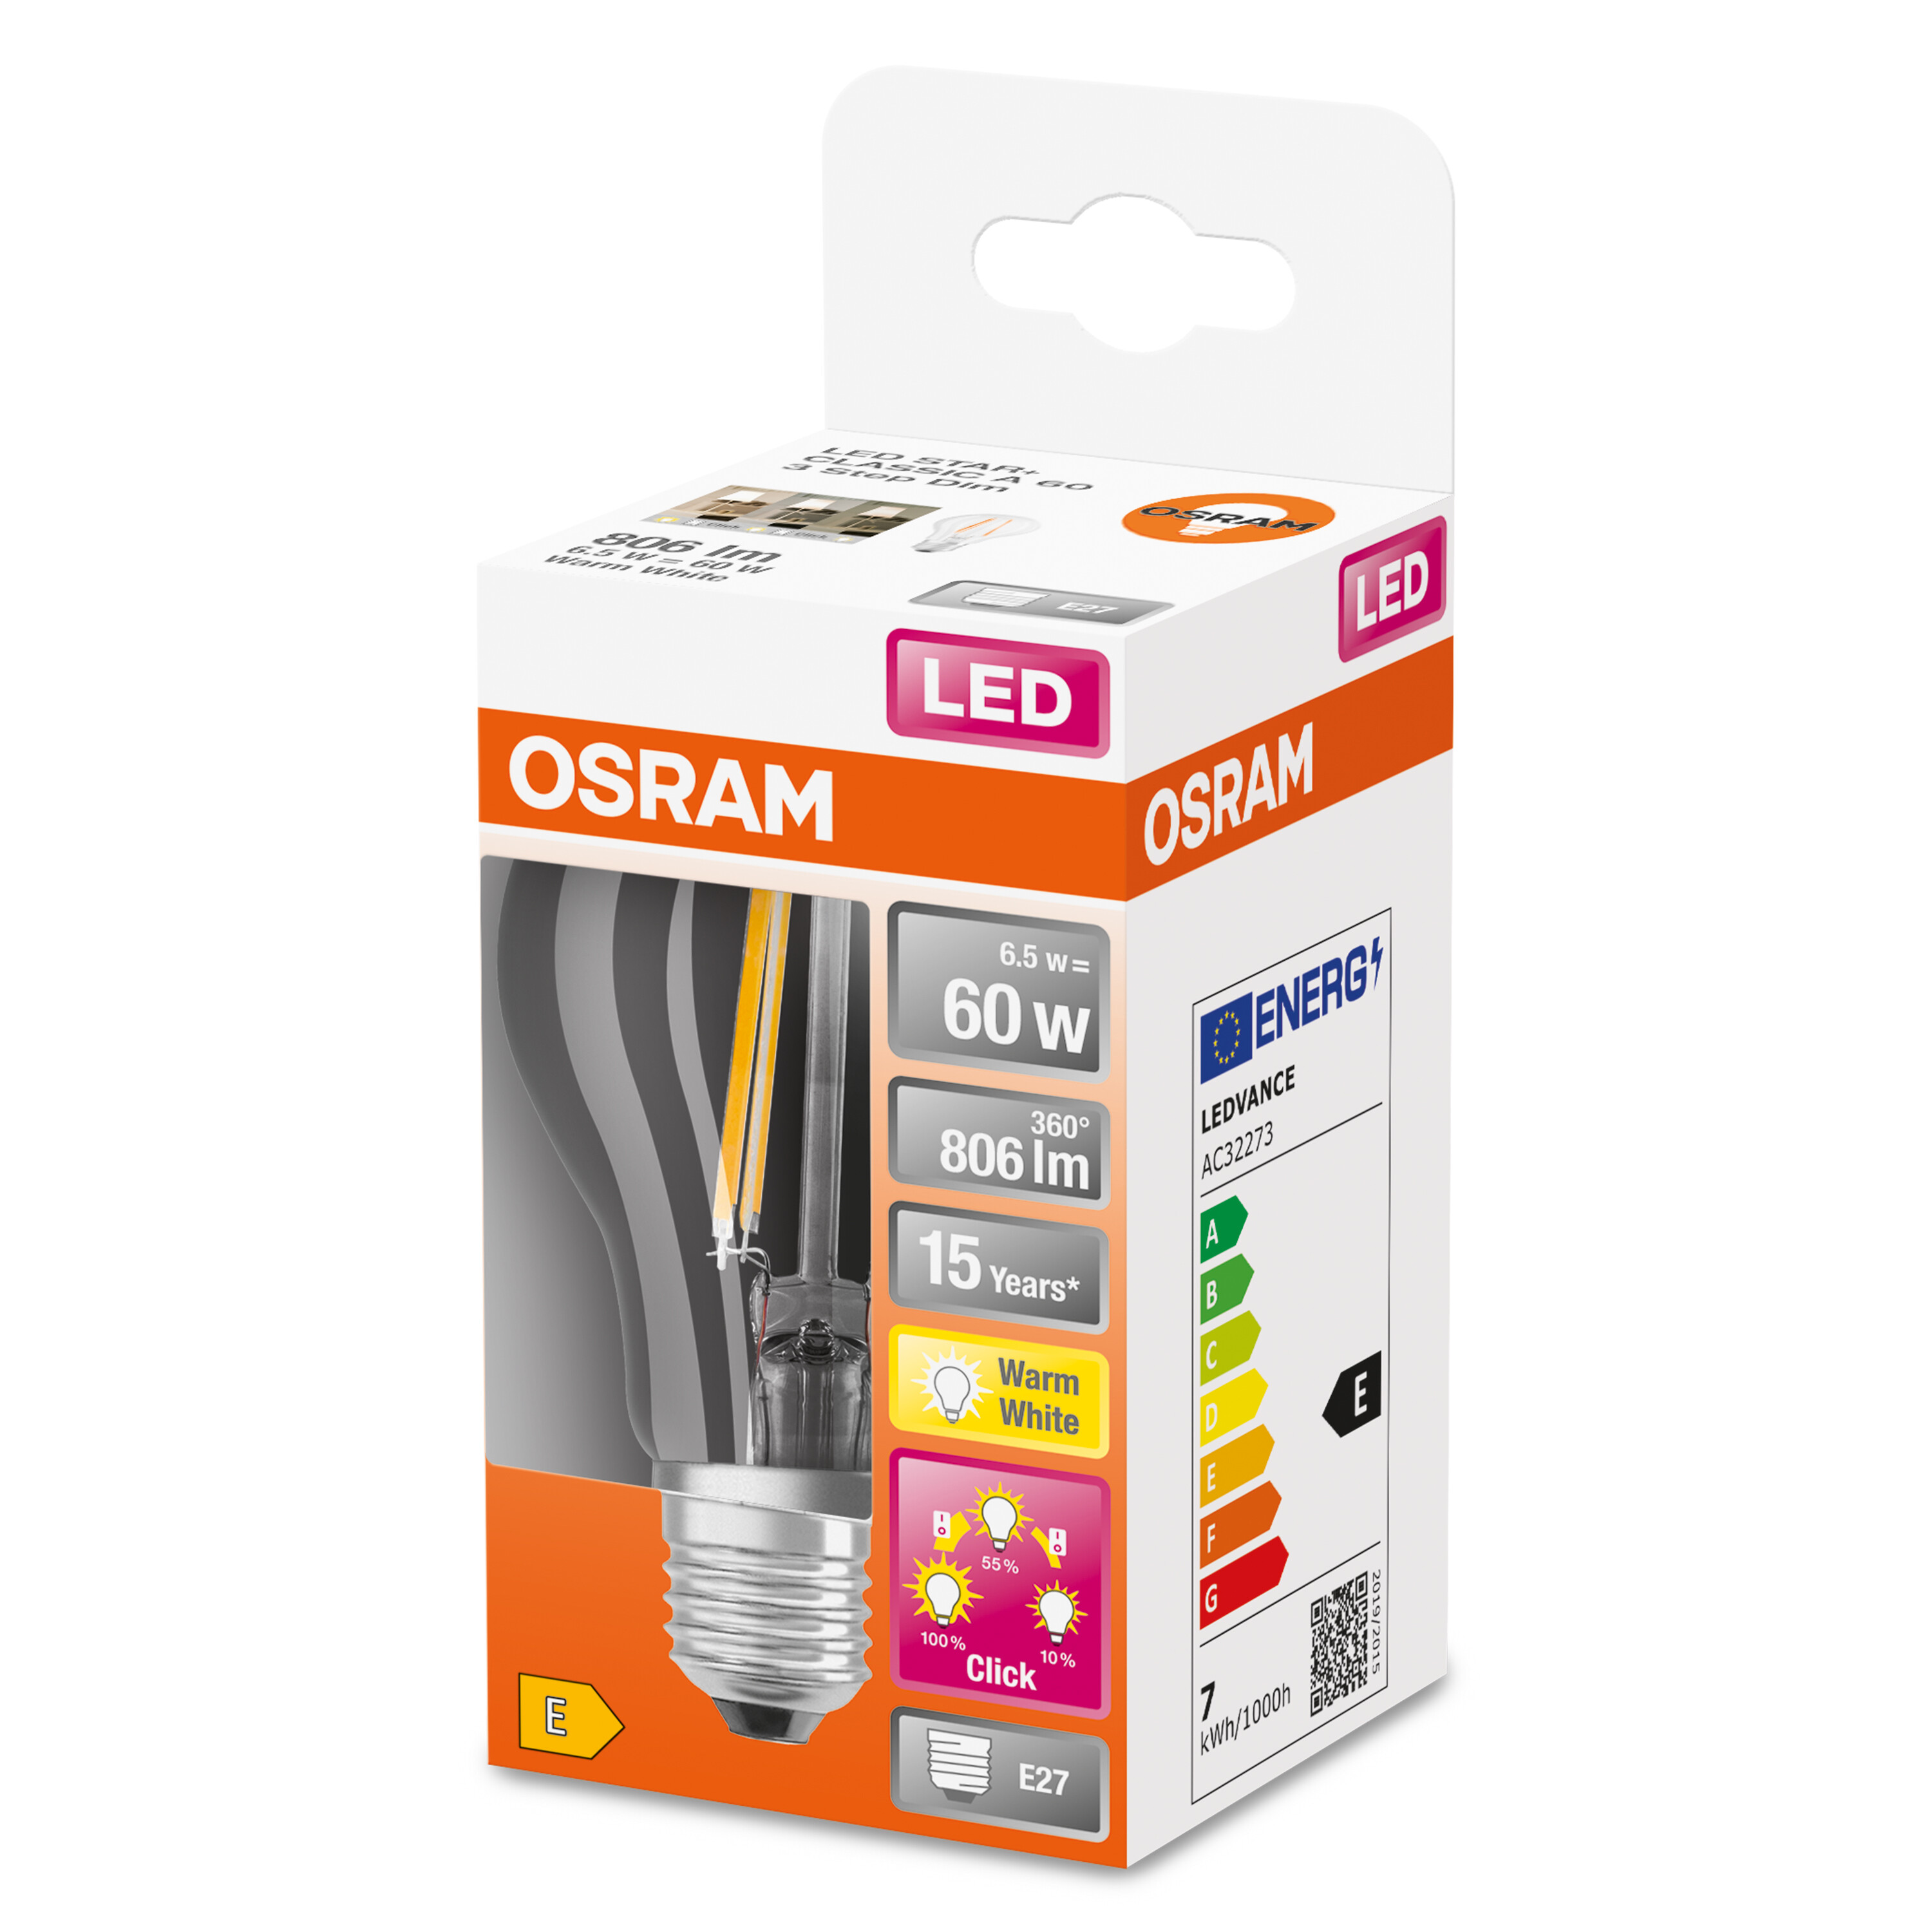 OSRAM  LED Warmweiß STEP Lampe 806 Lumen LED DIM THREE A CLASSIC